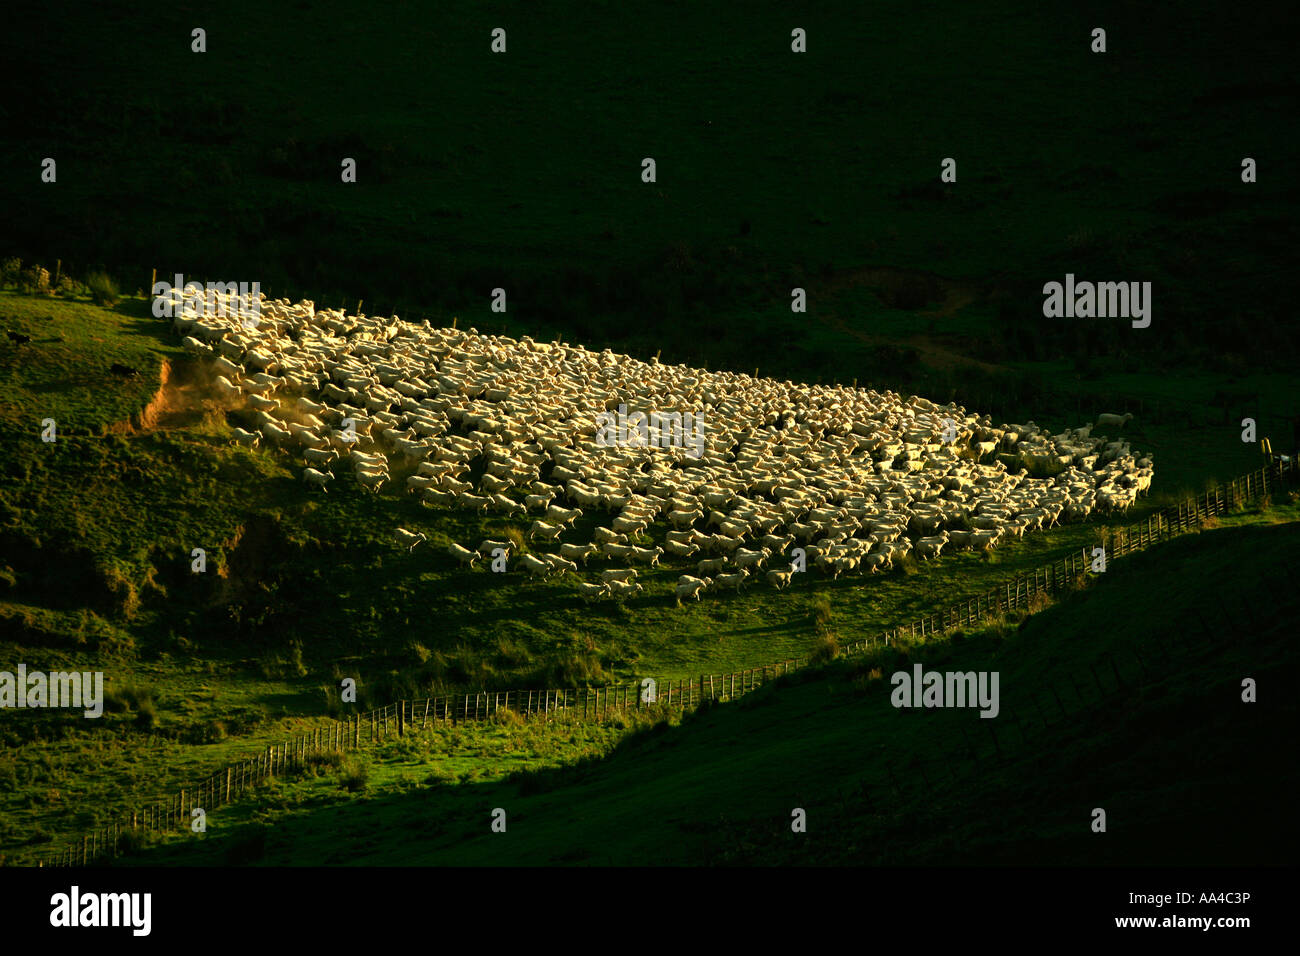 New Zealand farm scene with sheep Stock Photo